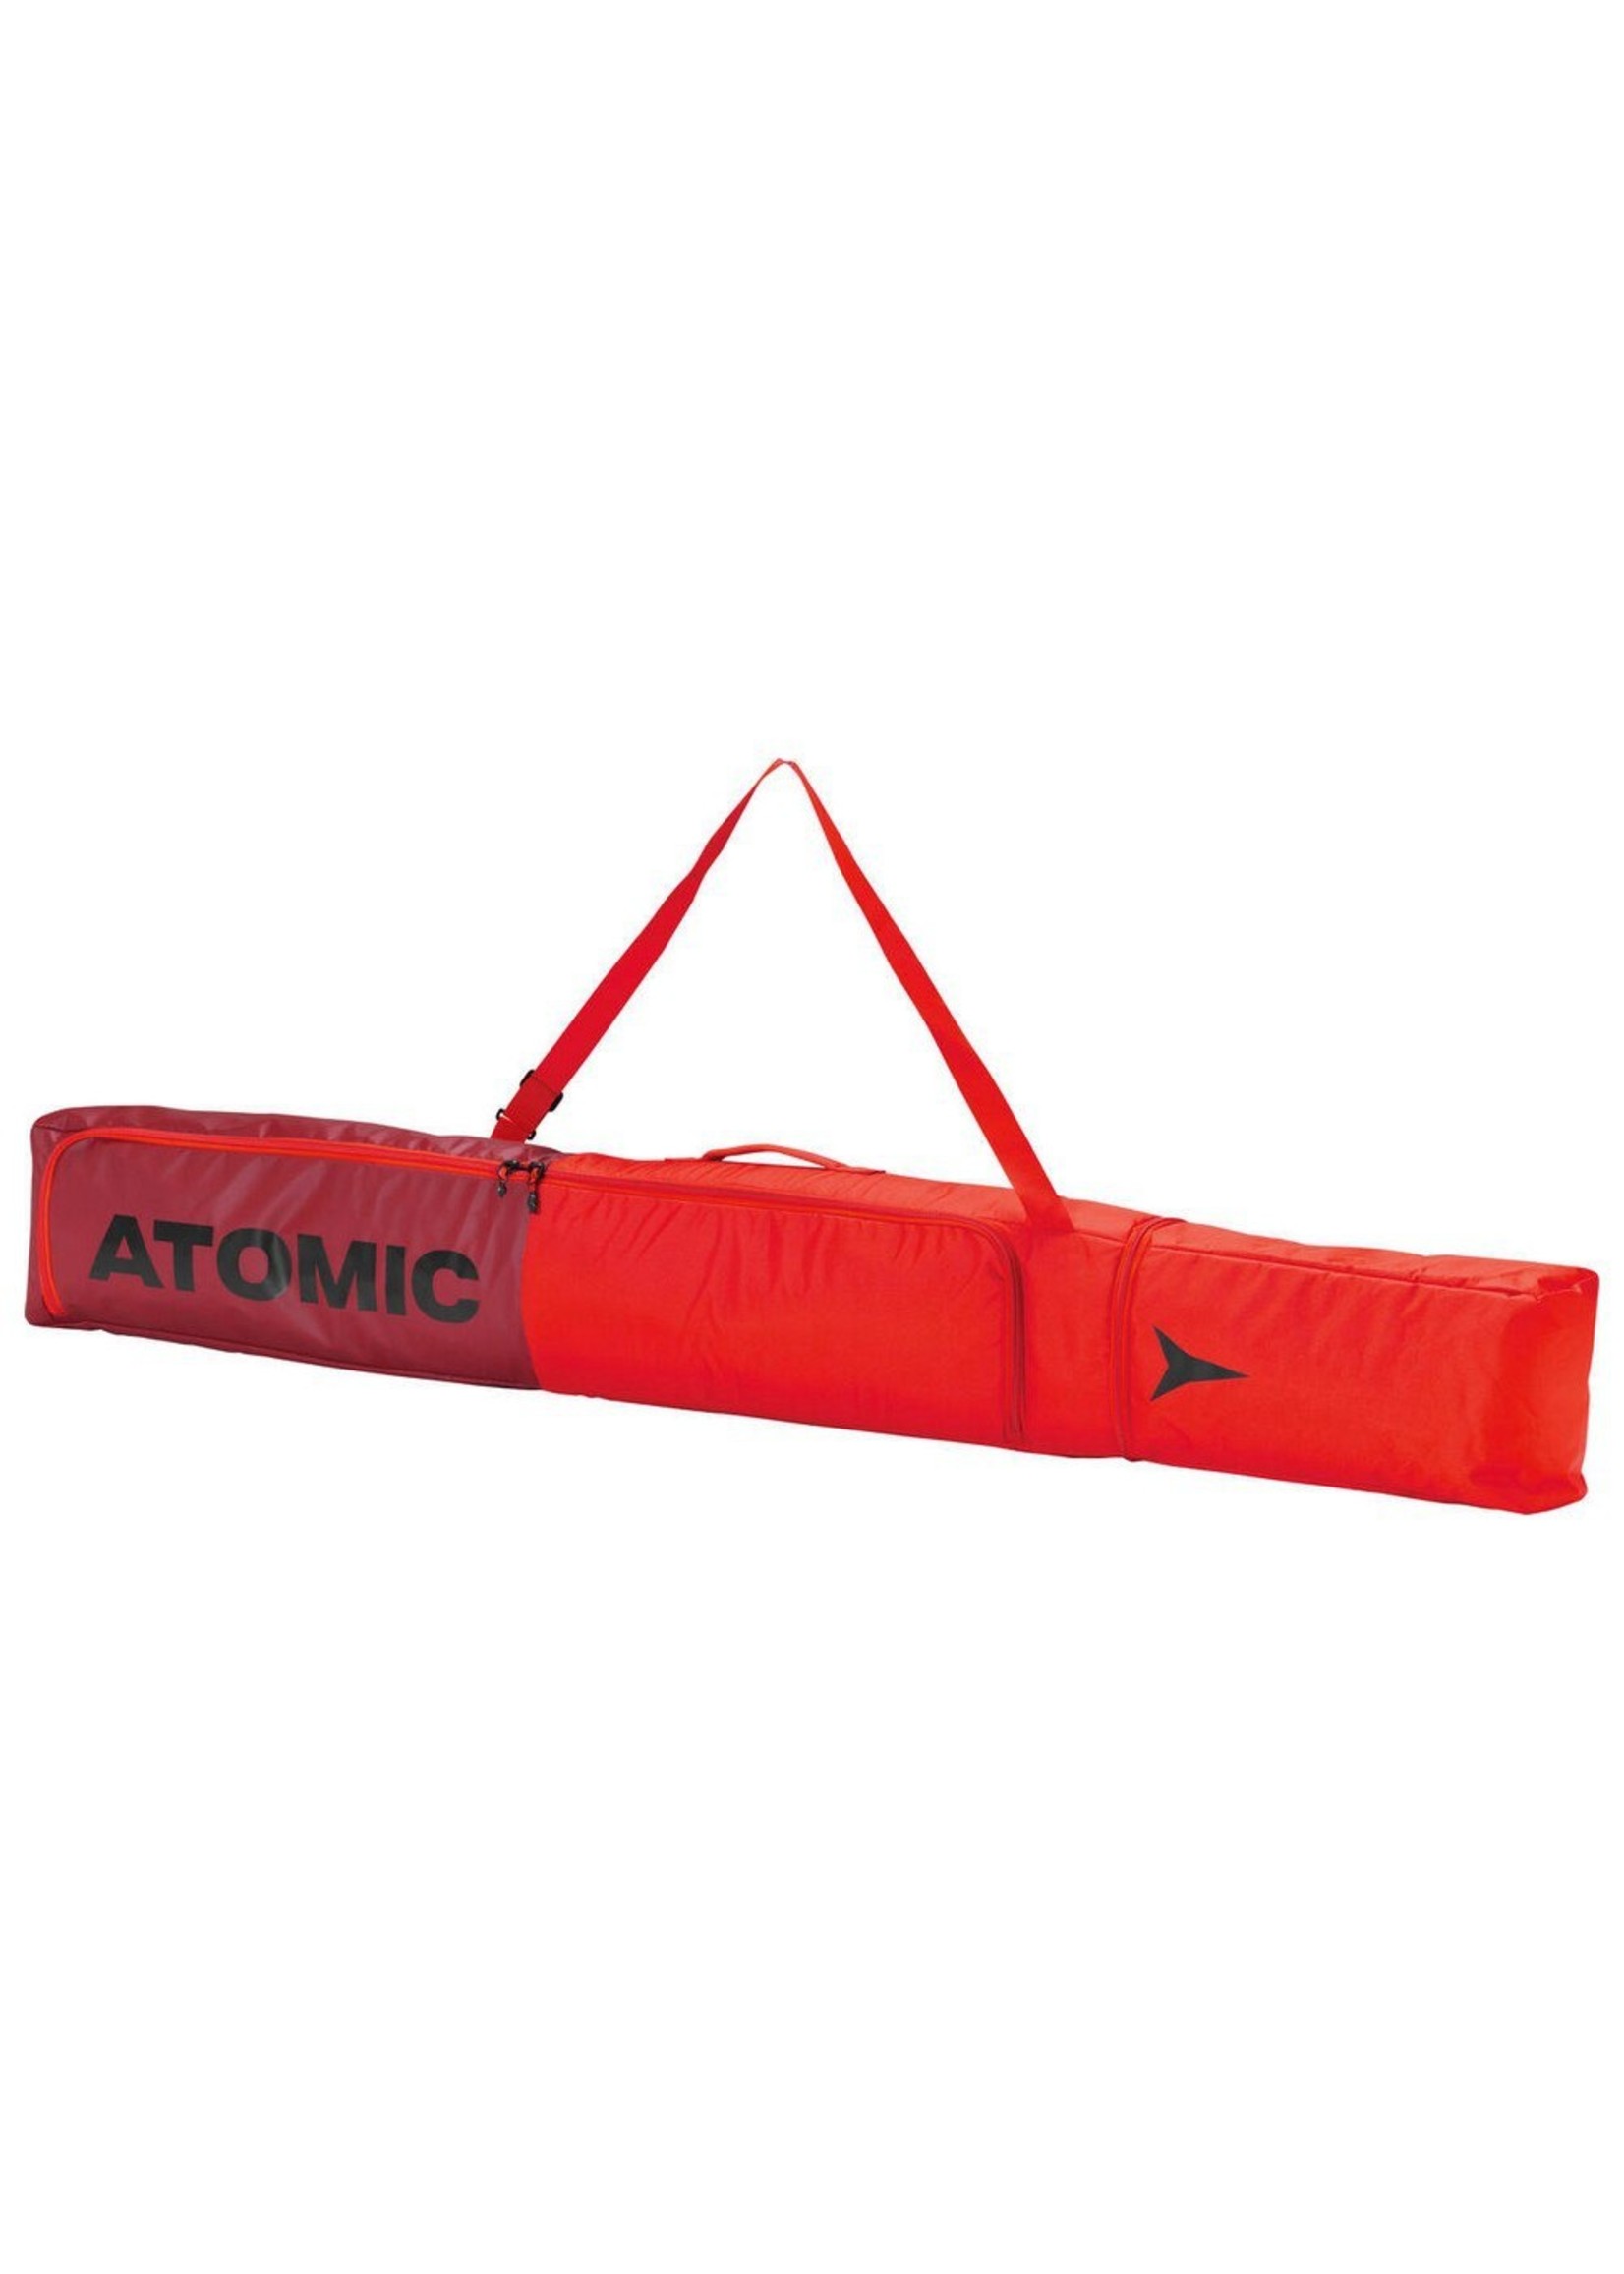 ATOMIC DOUBLE SKI BAG Red/Rio Red